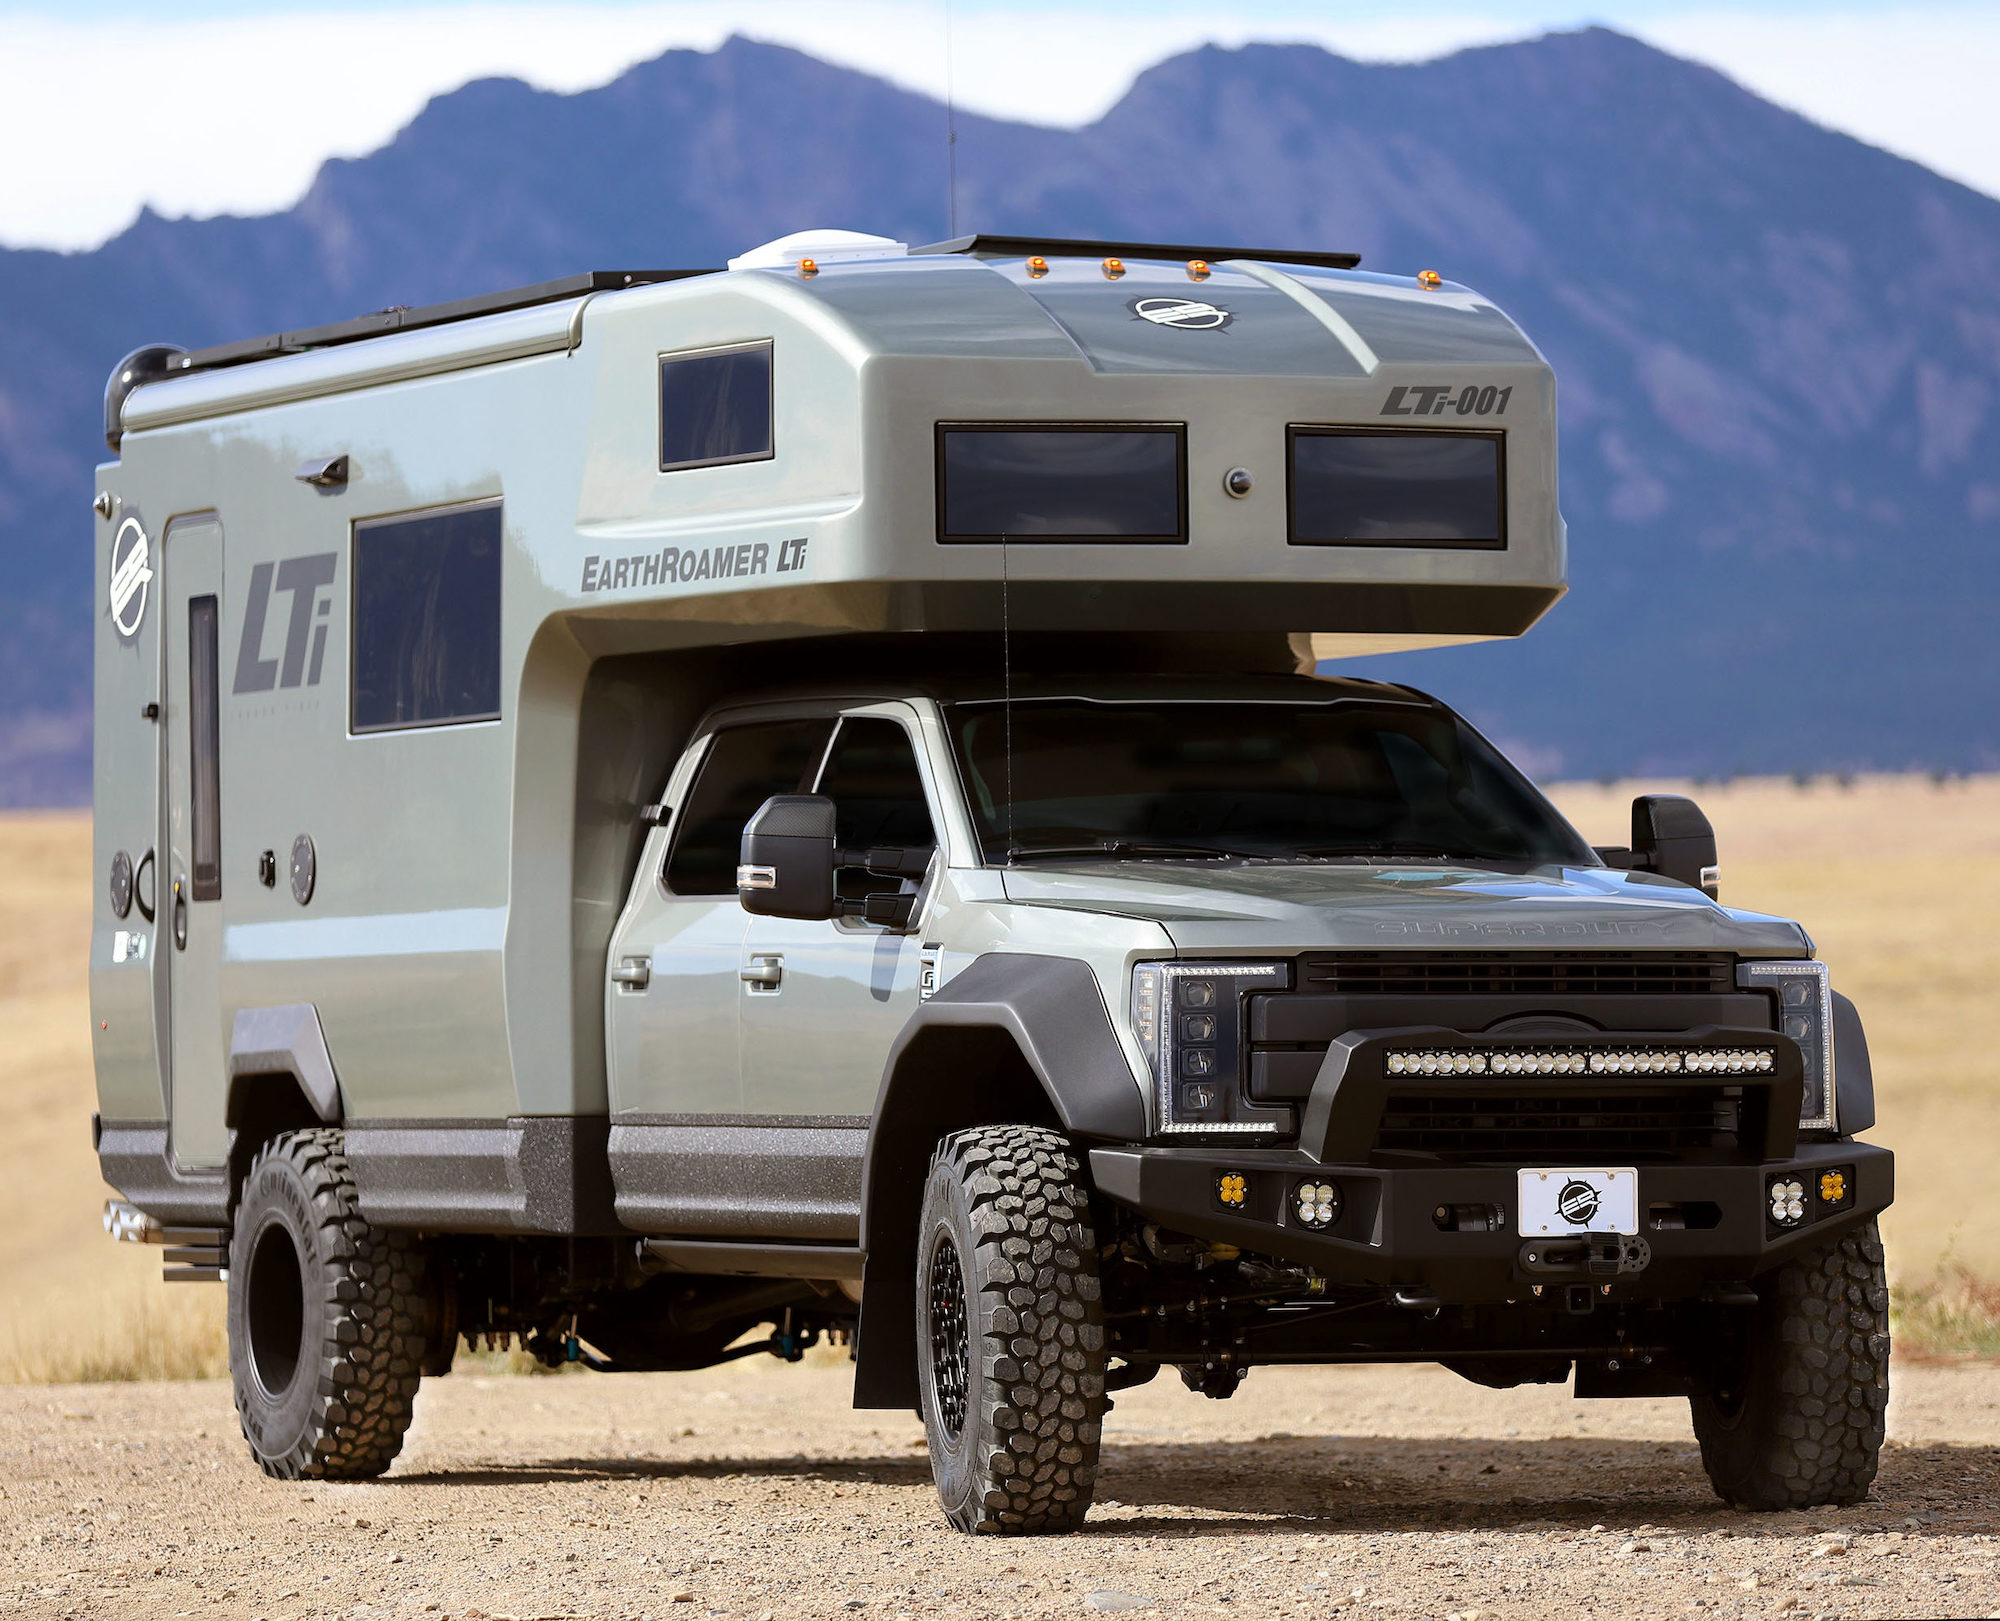 An overland vehicle, the EarthRoamer LTi in the desert.